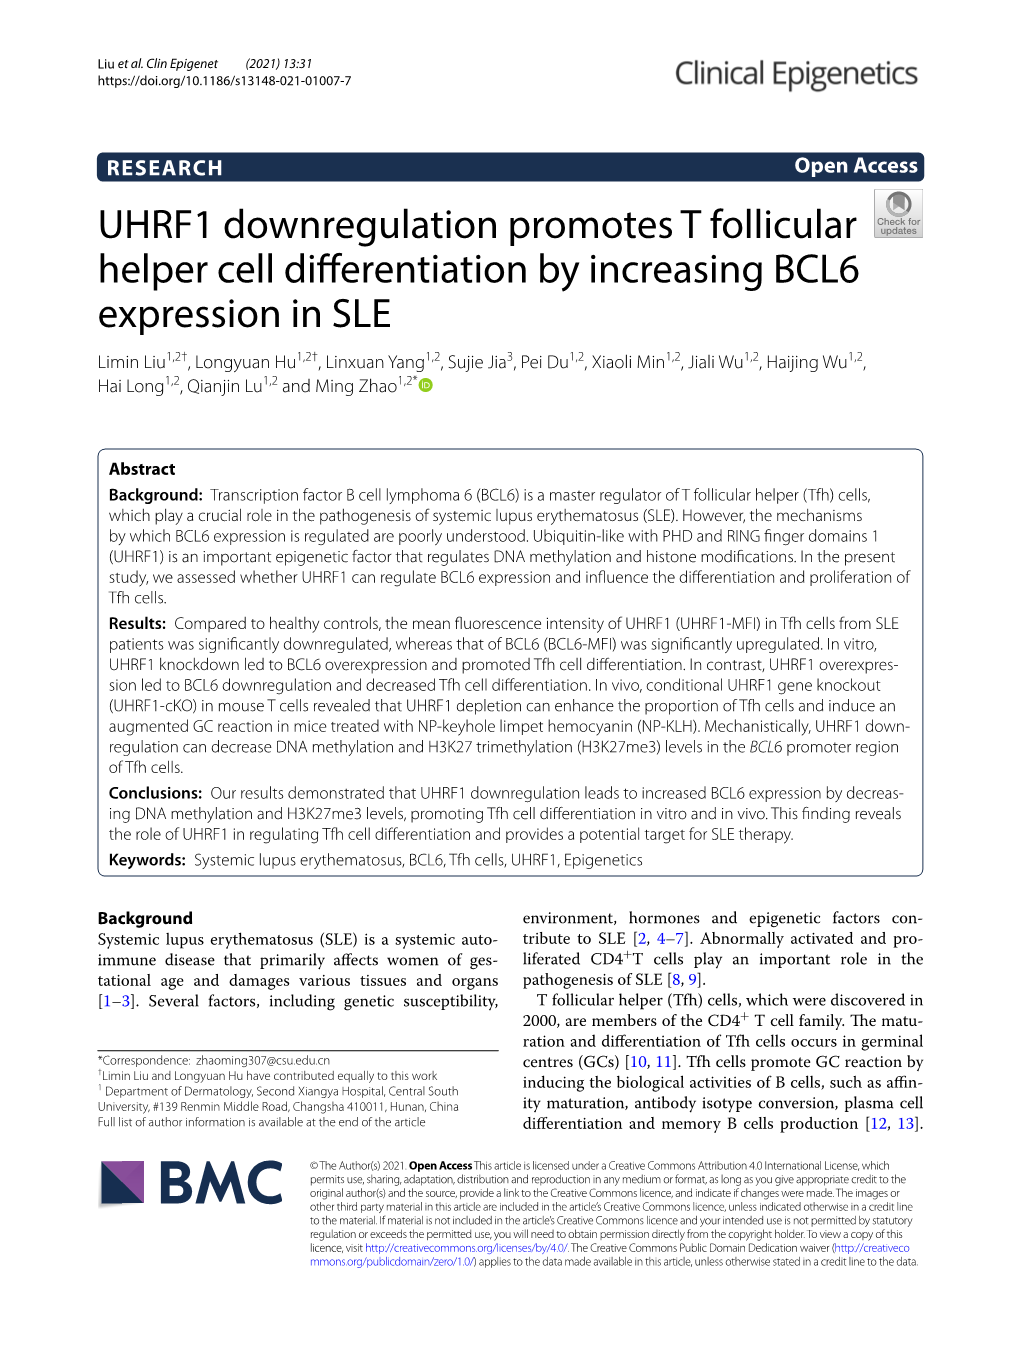 UHRF1 Downregulation Promotes T Follicular Helper Cell Differentiation